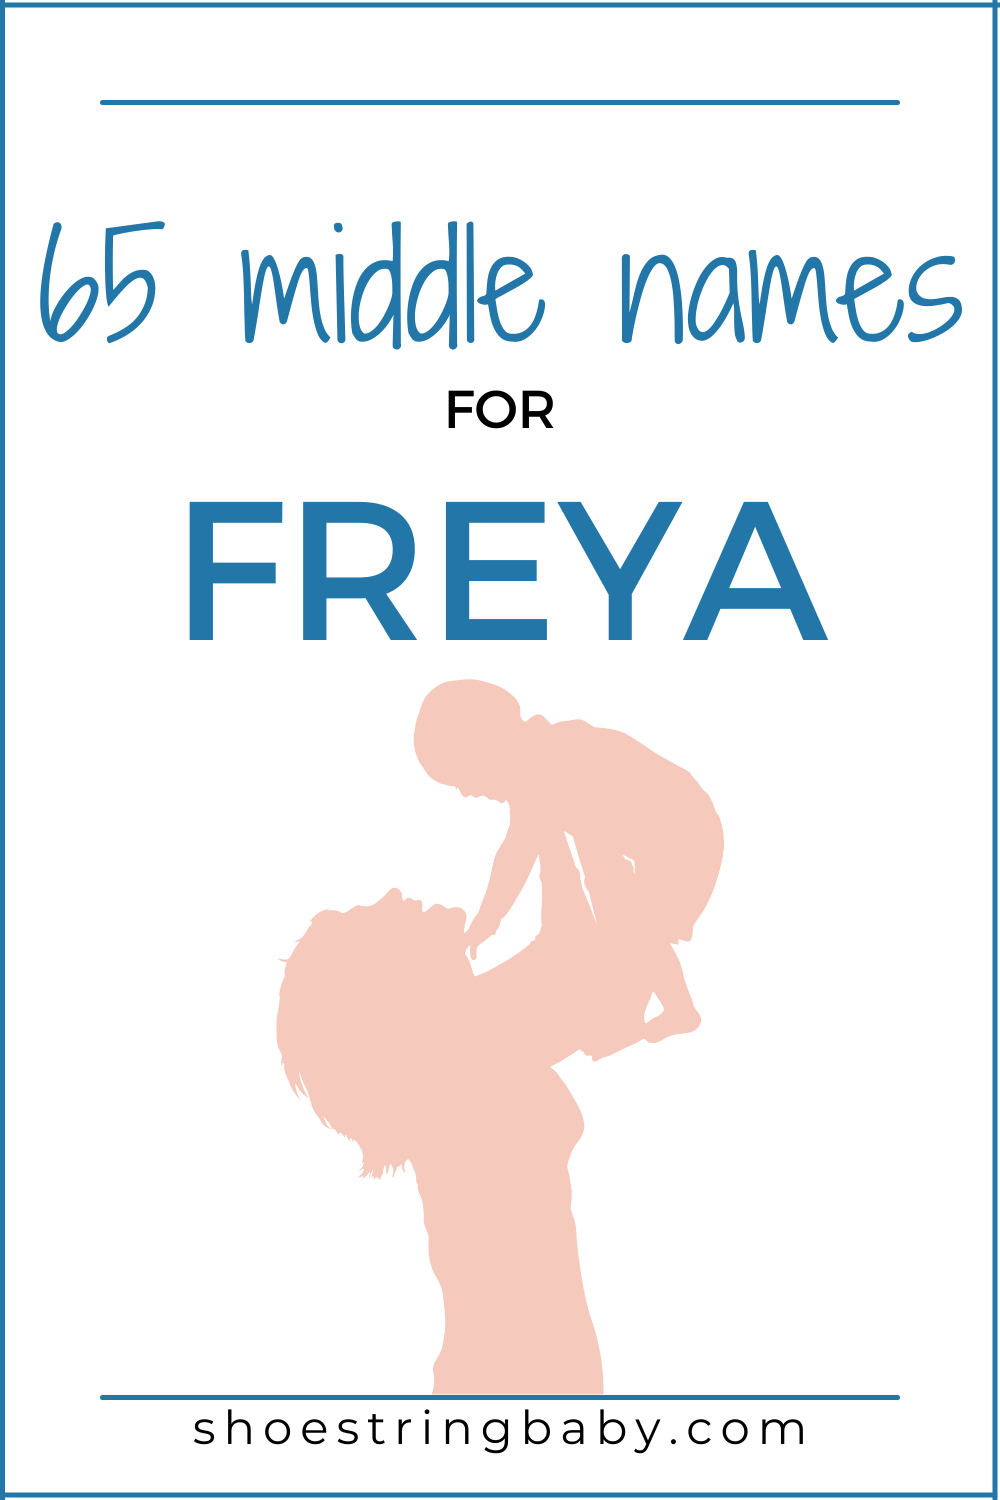 65+ Fresh Middle Names for Freya